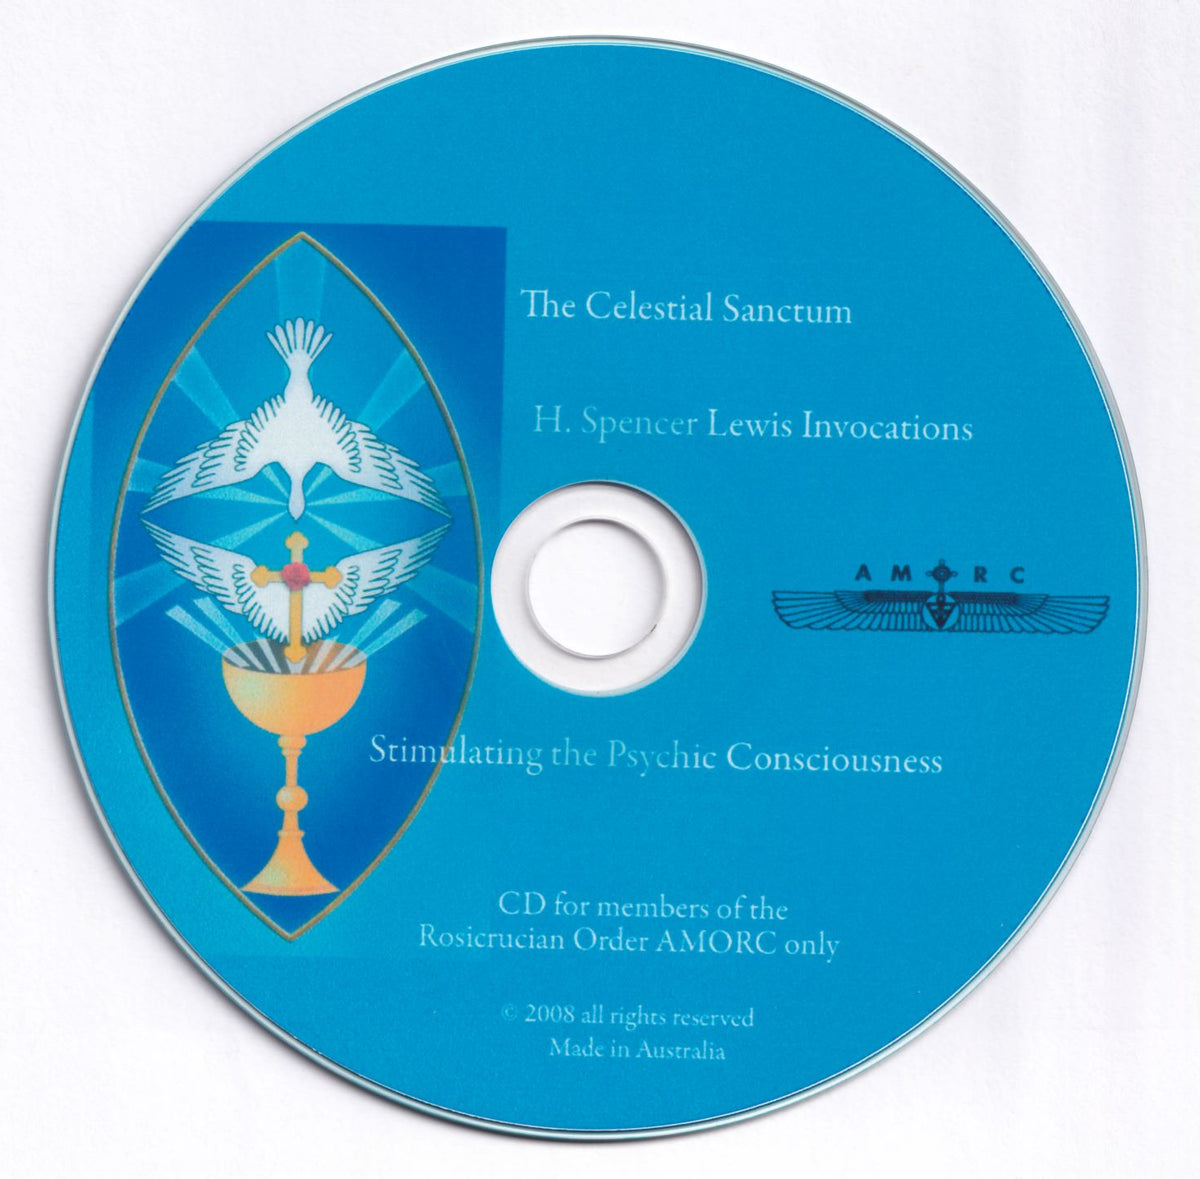 The Celestial Sanctum CD - AMORC members only